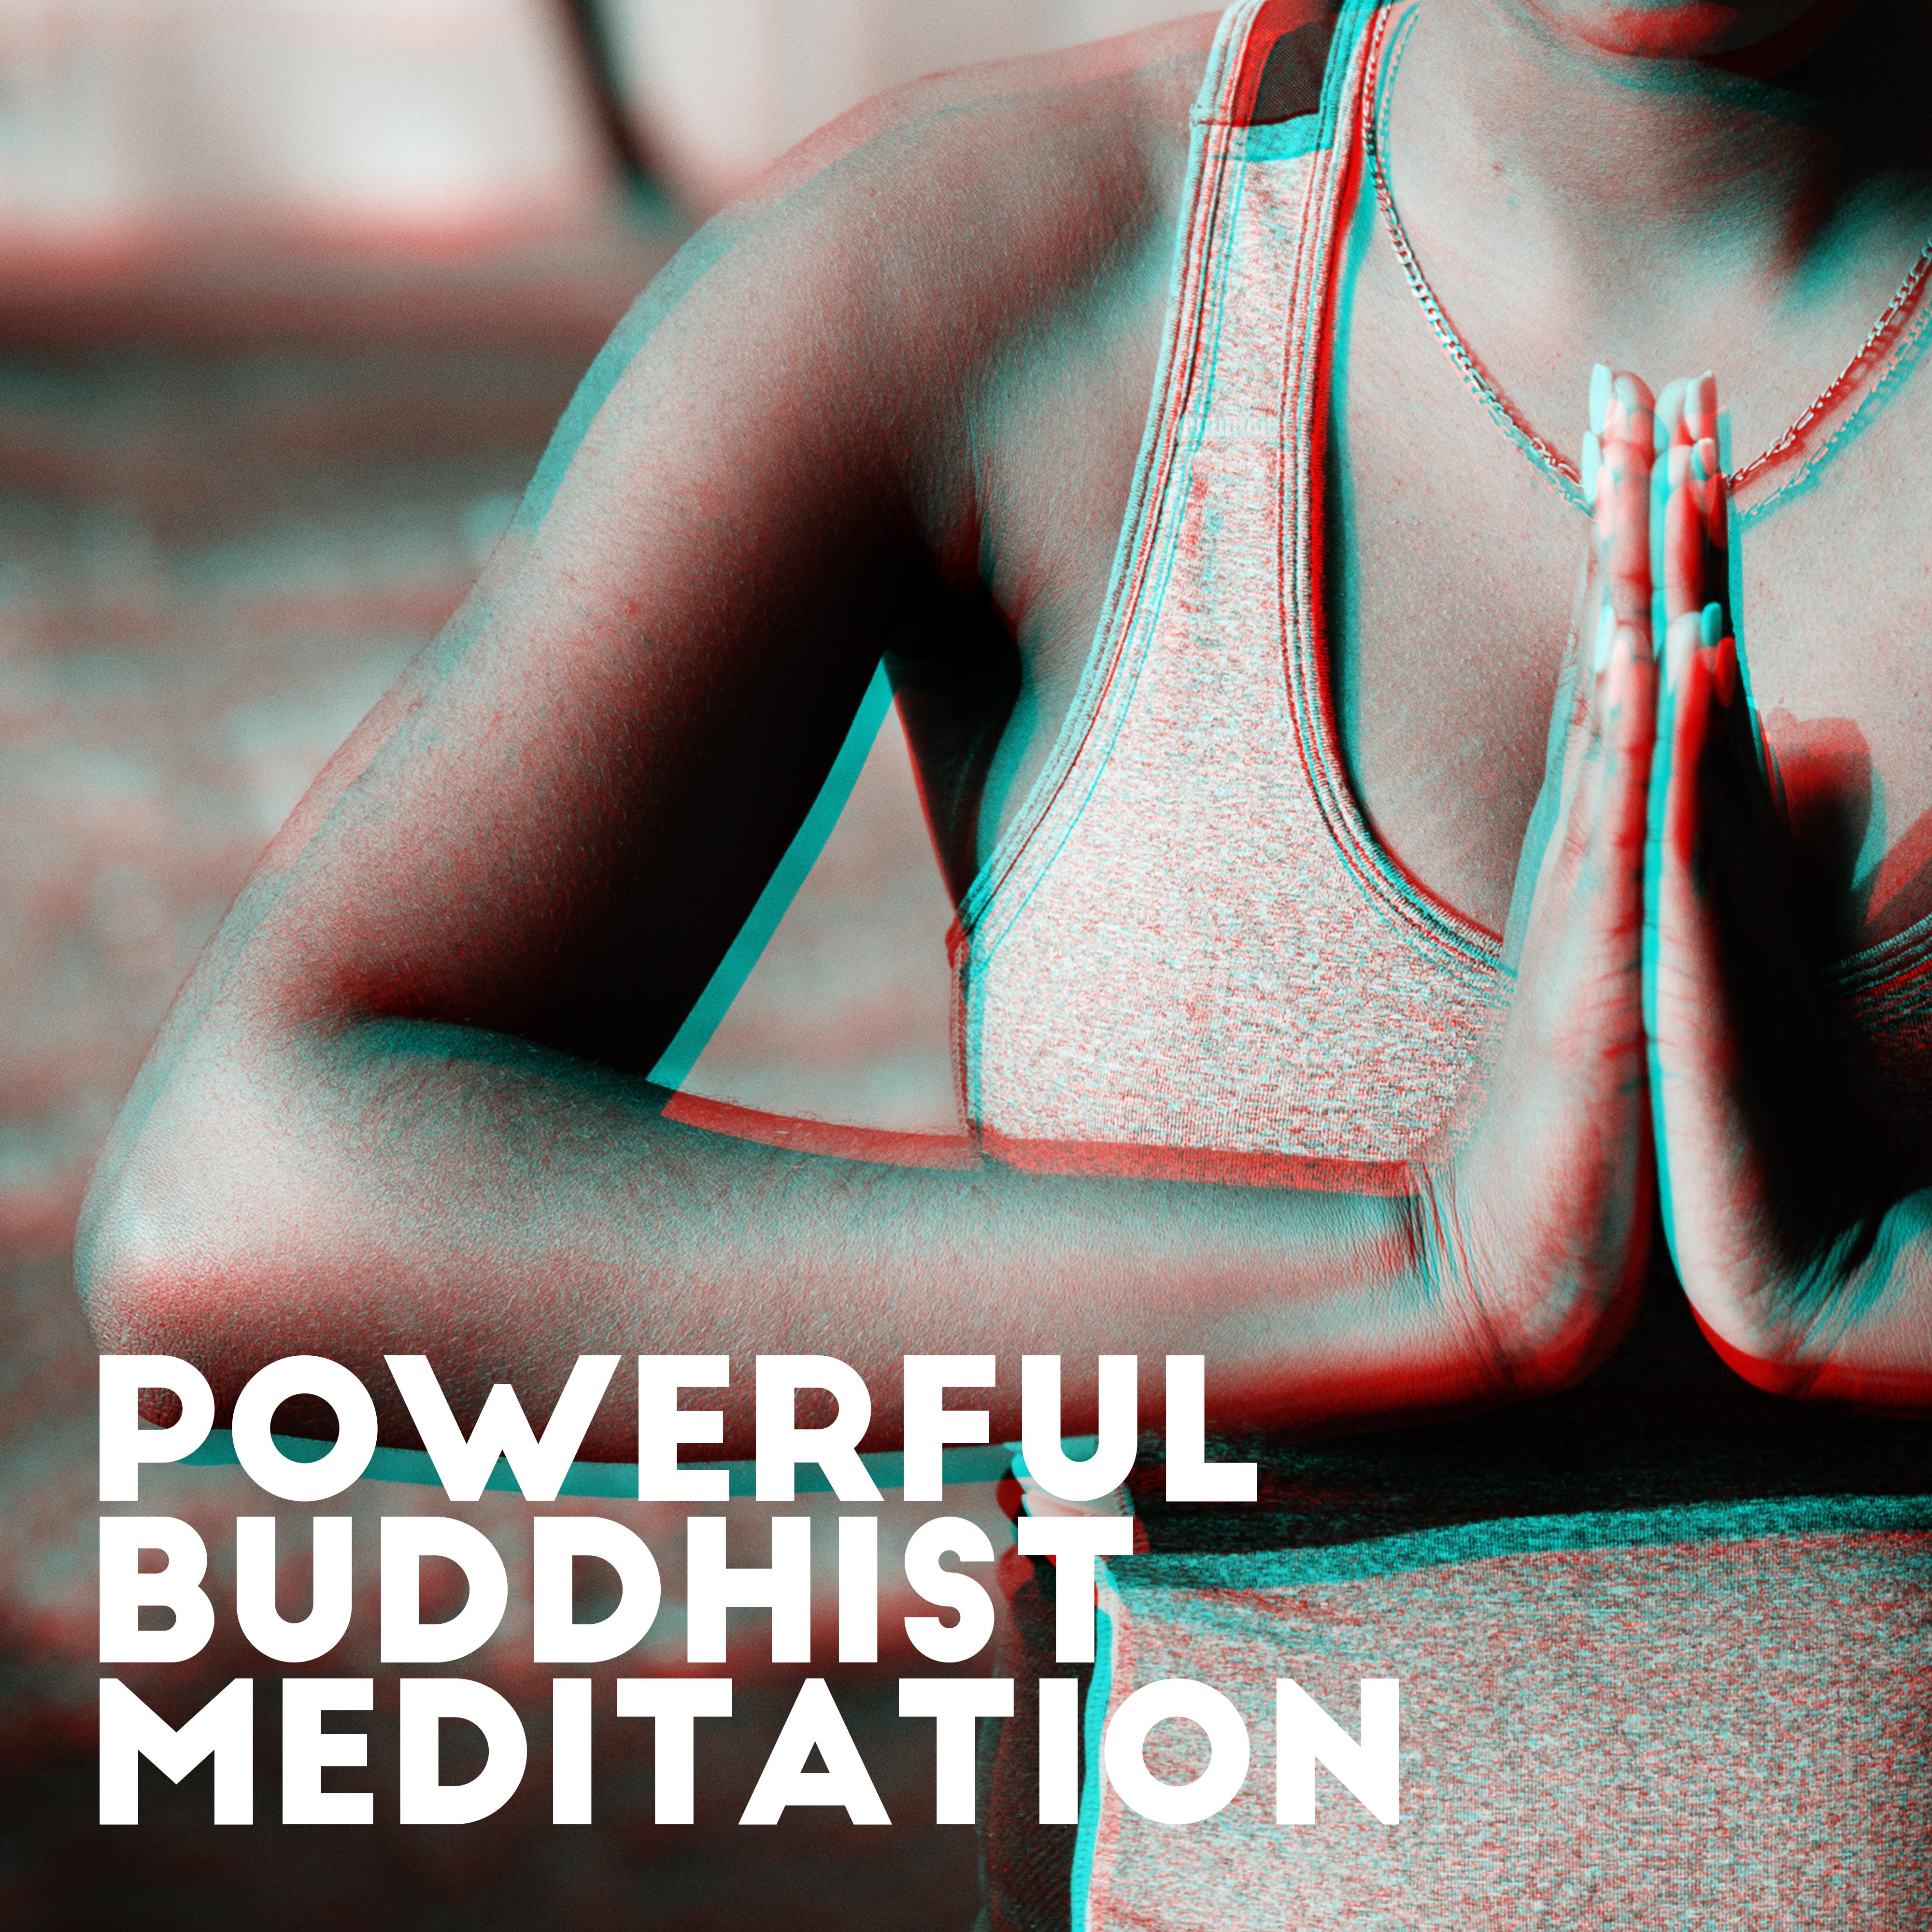 Powerful Buddhist Meditation – Music Background for Mantras, Meditation and Yoga Exercises